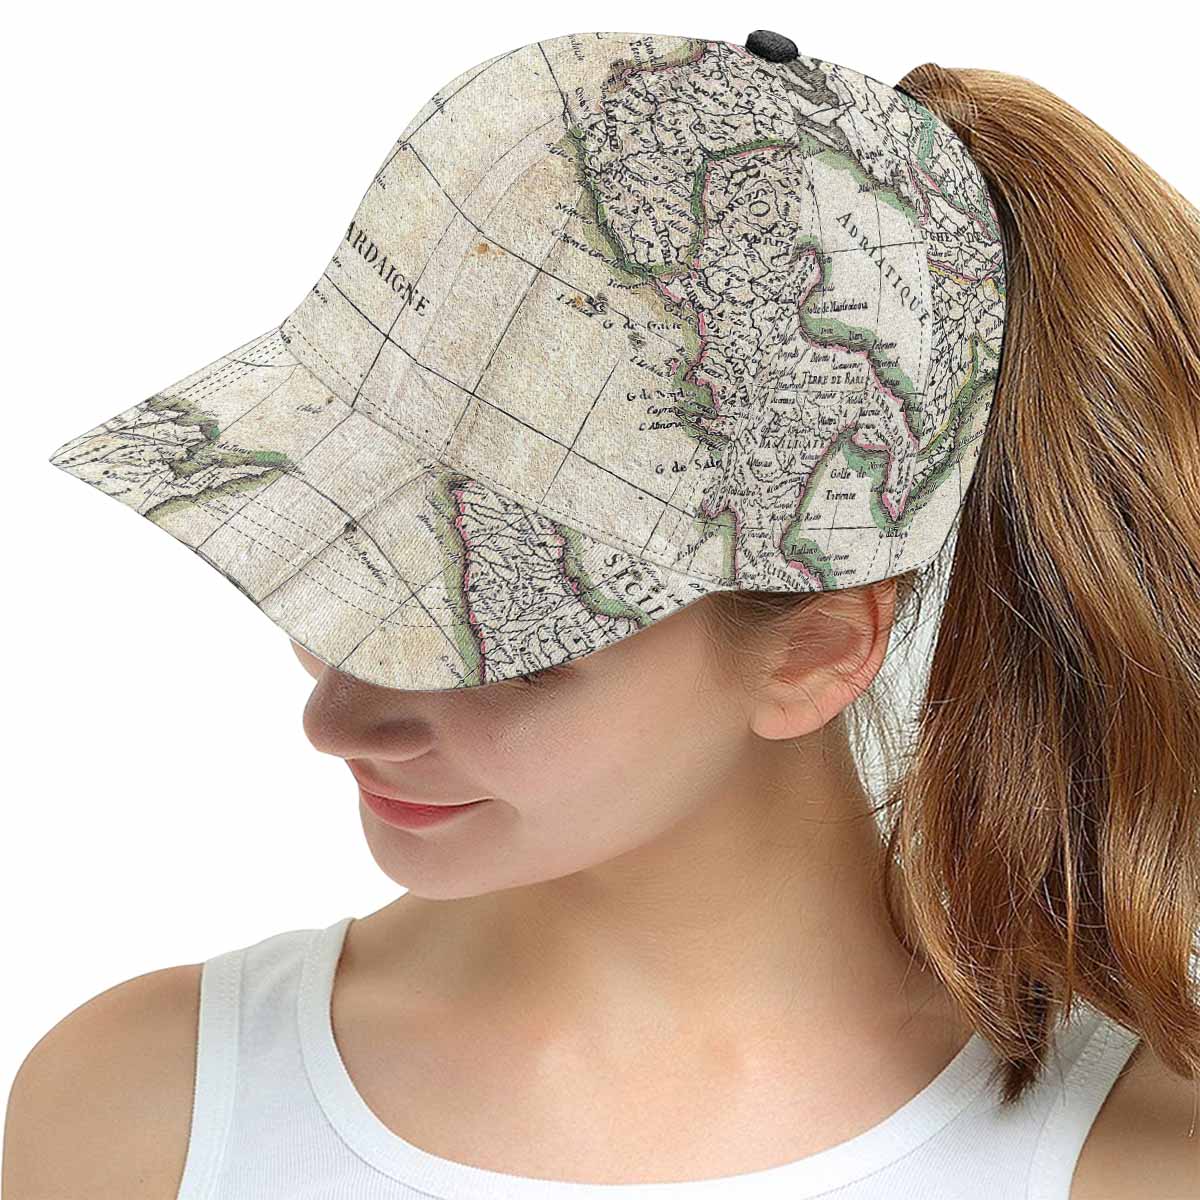 Antique Map design mens or womens deep snapback cap, trucker hat, Design 6